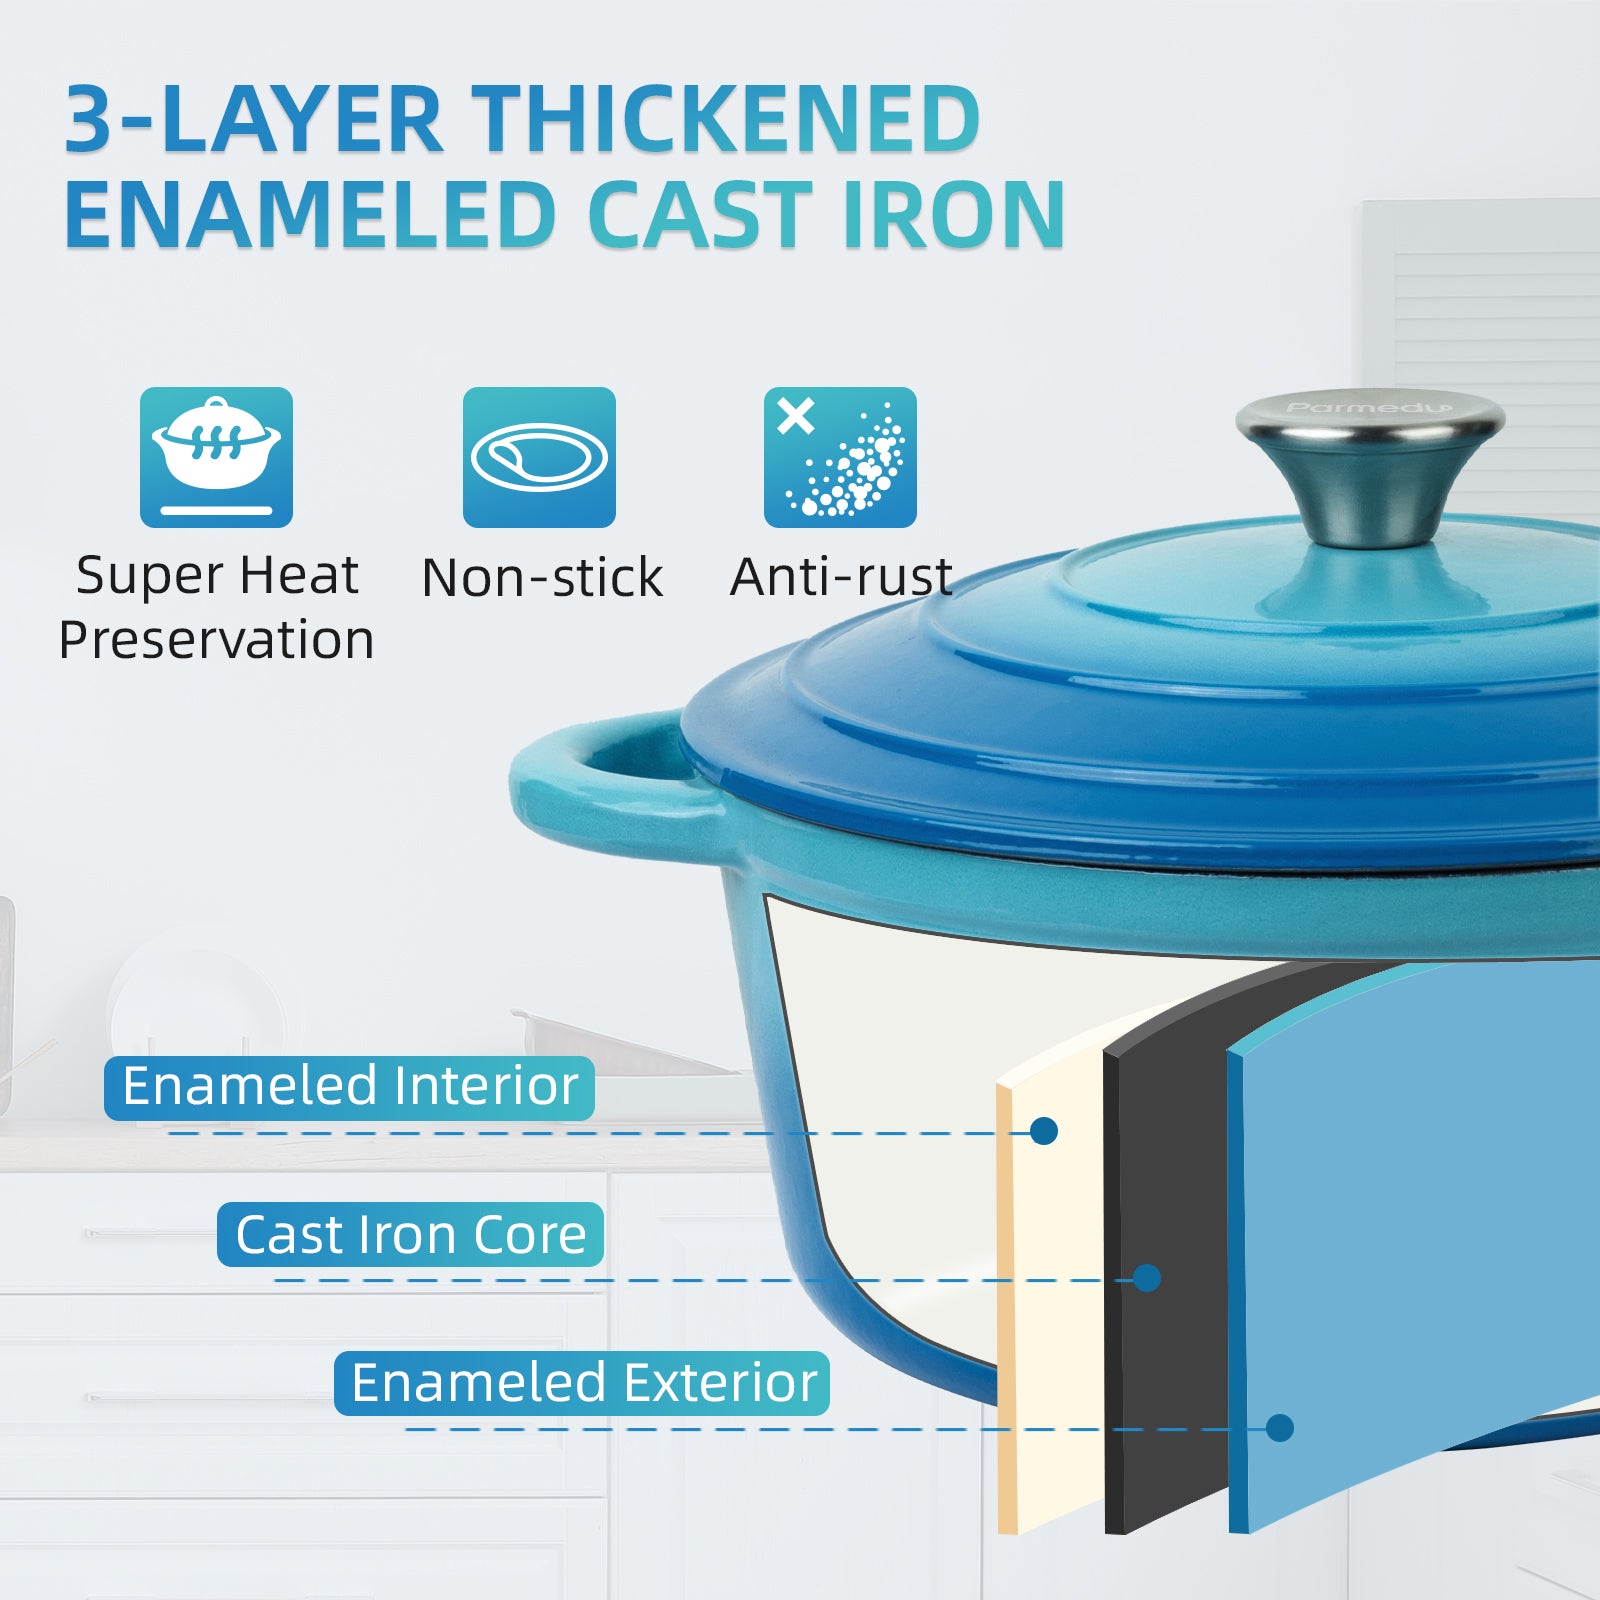 6 Qt Enameled Cast Iron Dutch Oven Pot with Lid Heavy-Duty Casserole Dish  Blue